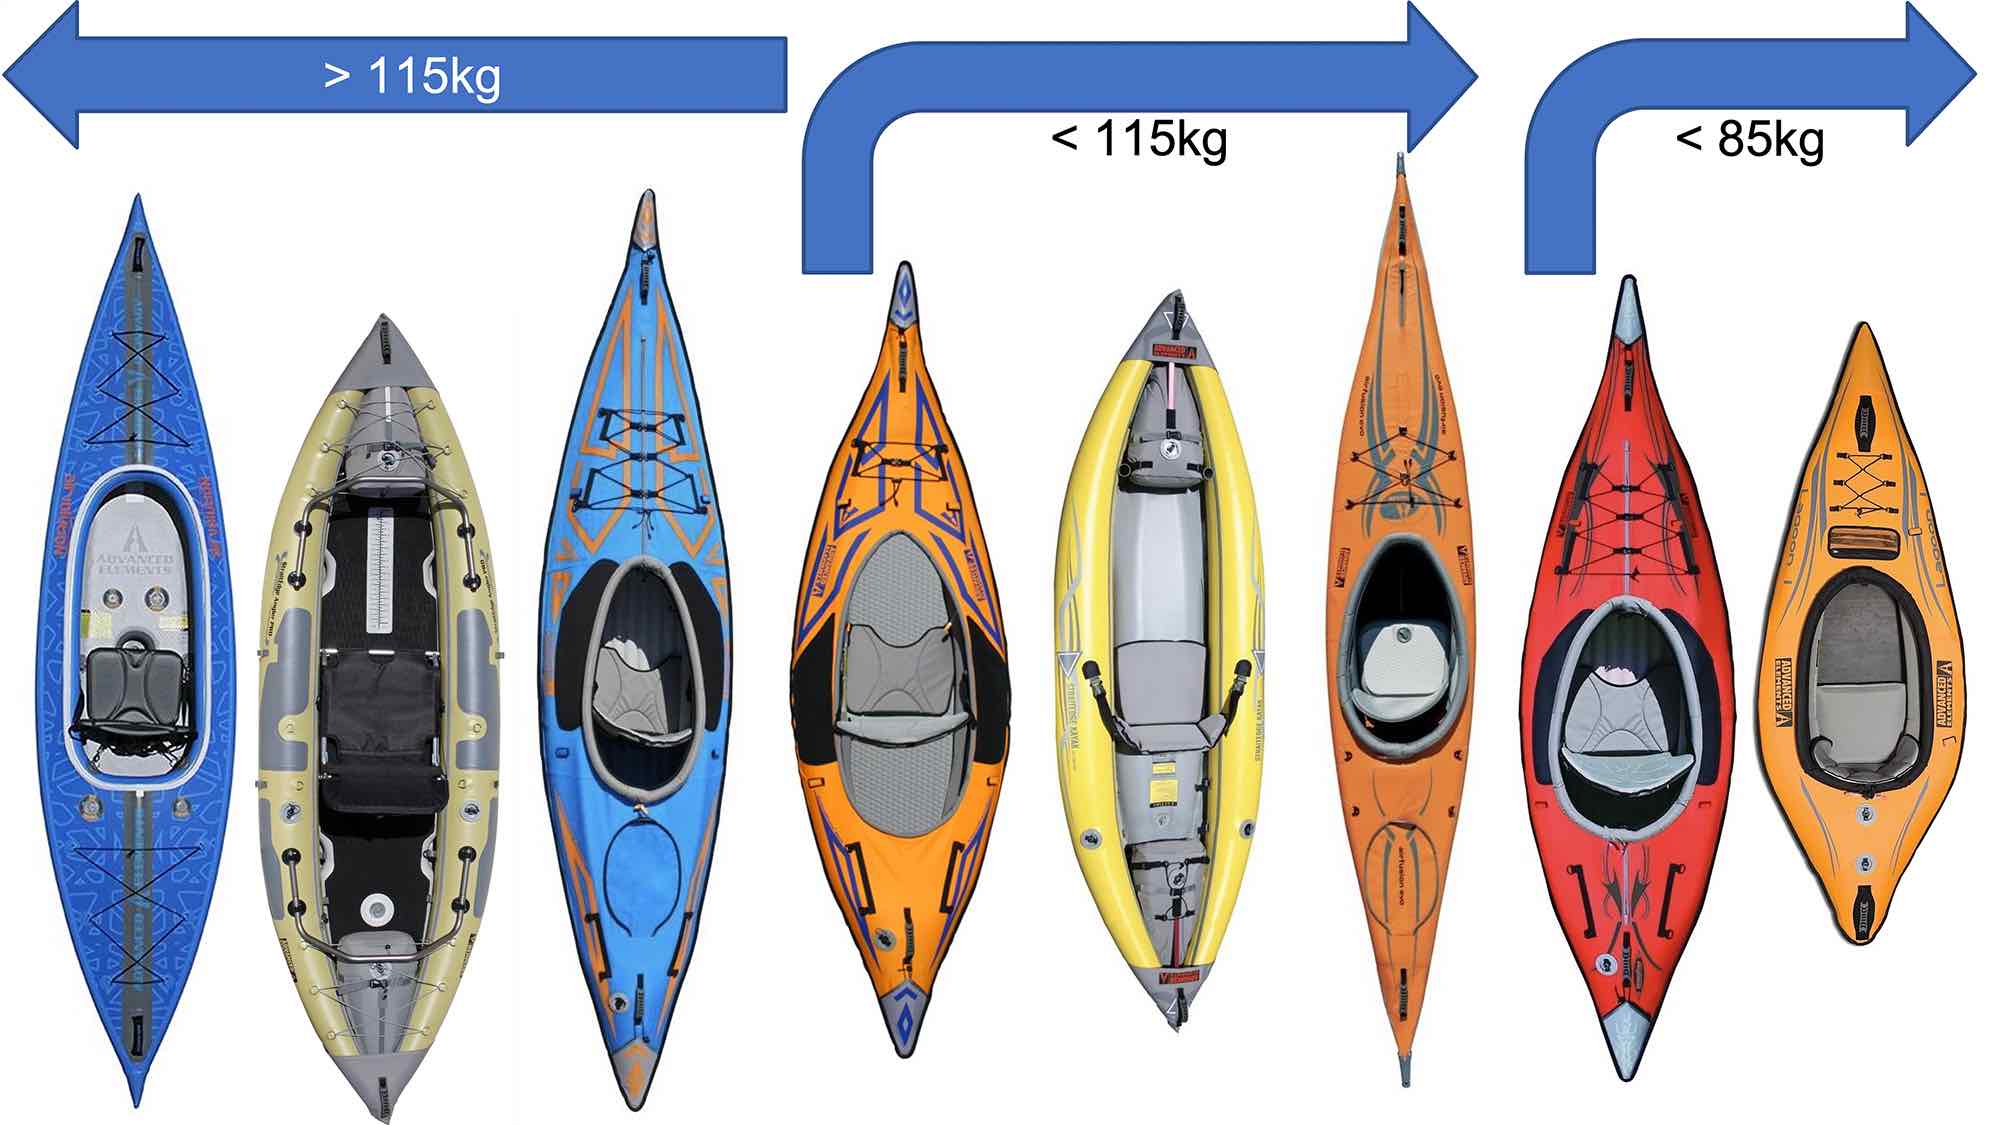 solo kayaks based on weight